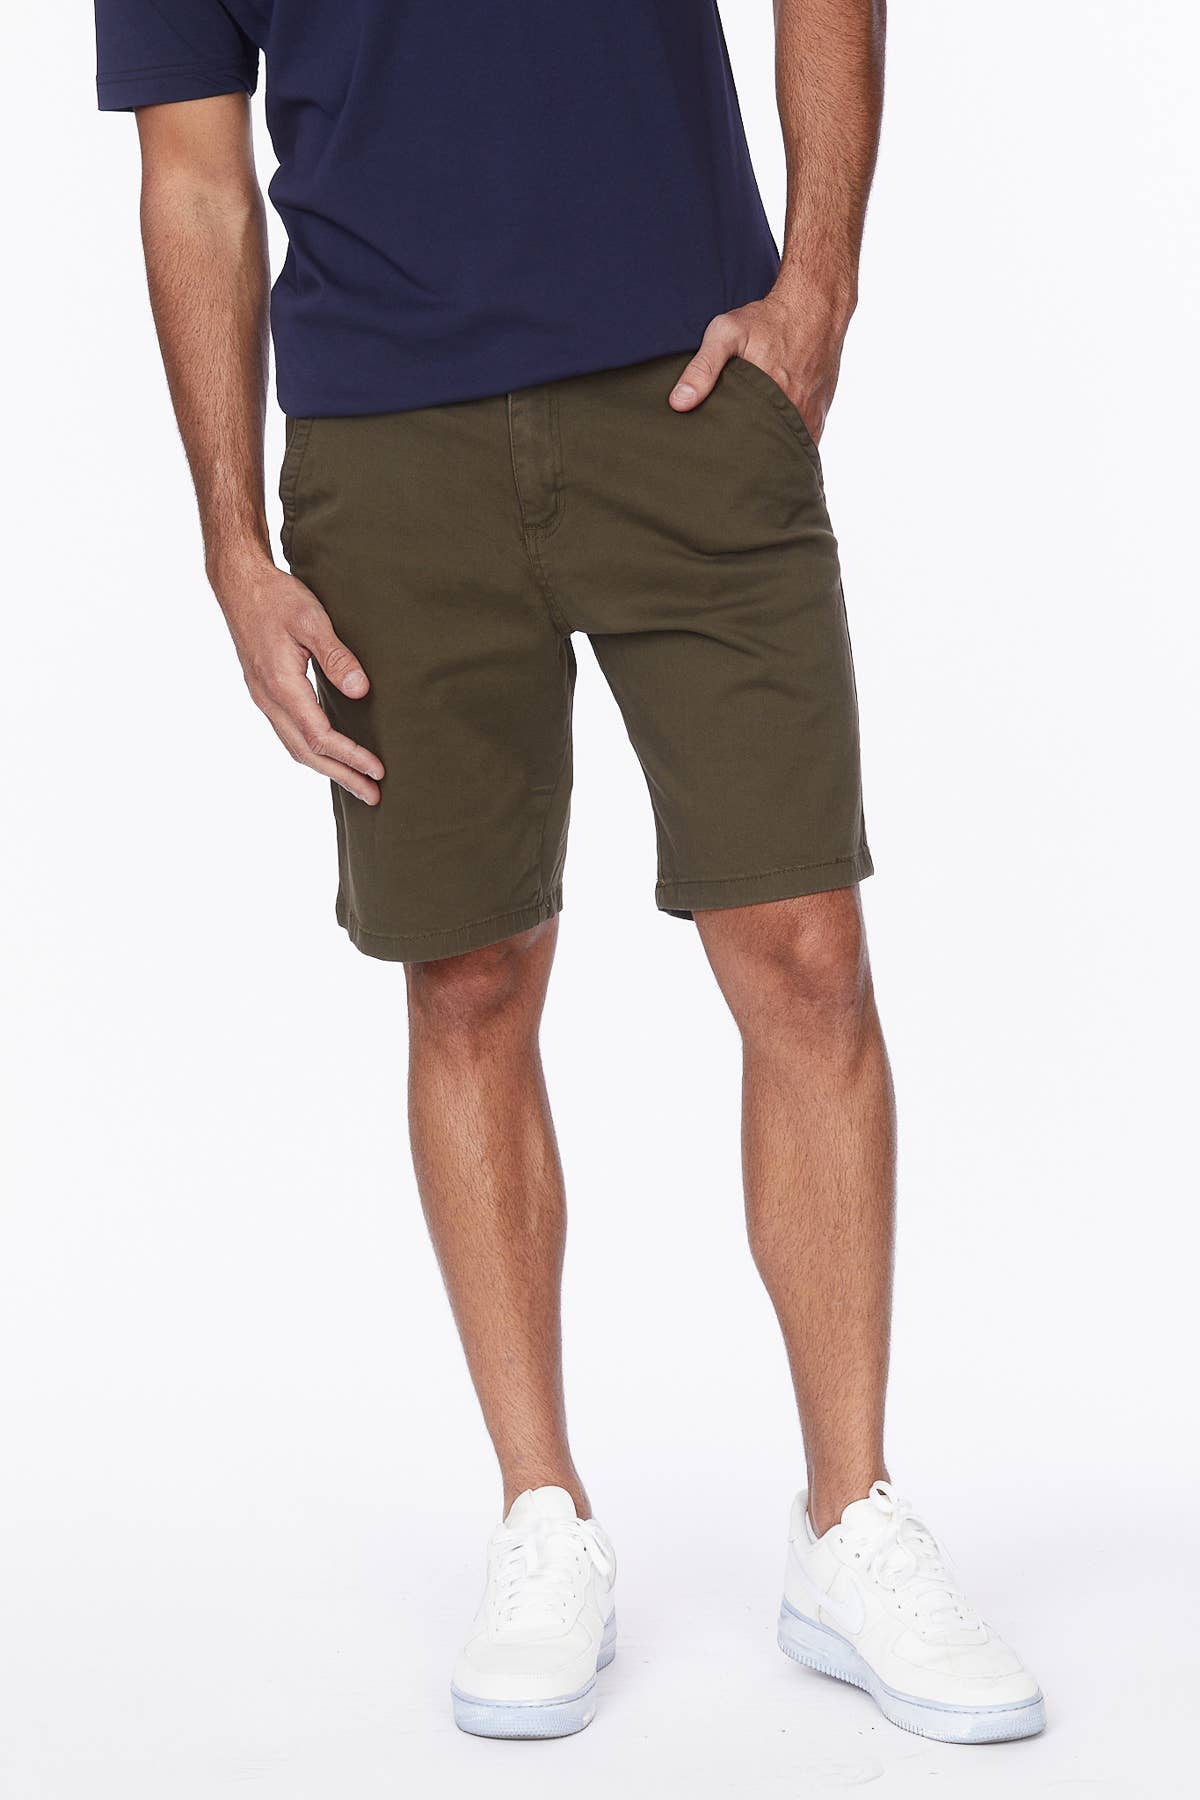 Men's Twill Summer Stretch 4 Pocket Chino Shorts - Olive - Vault Board Shop Hawk's Bay